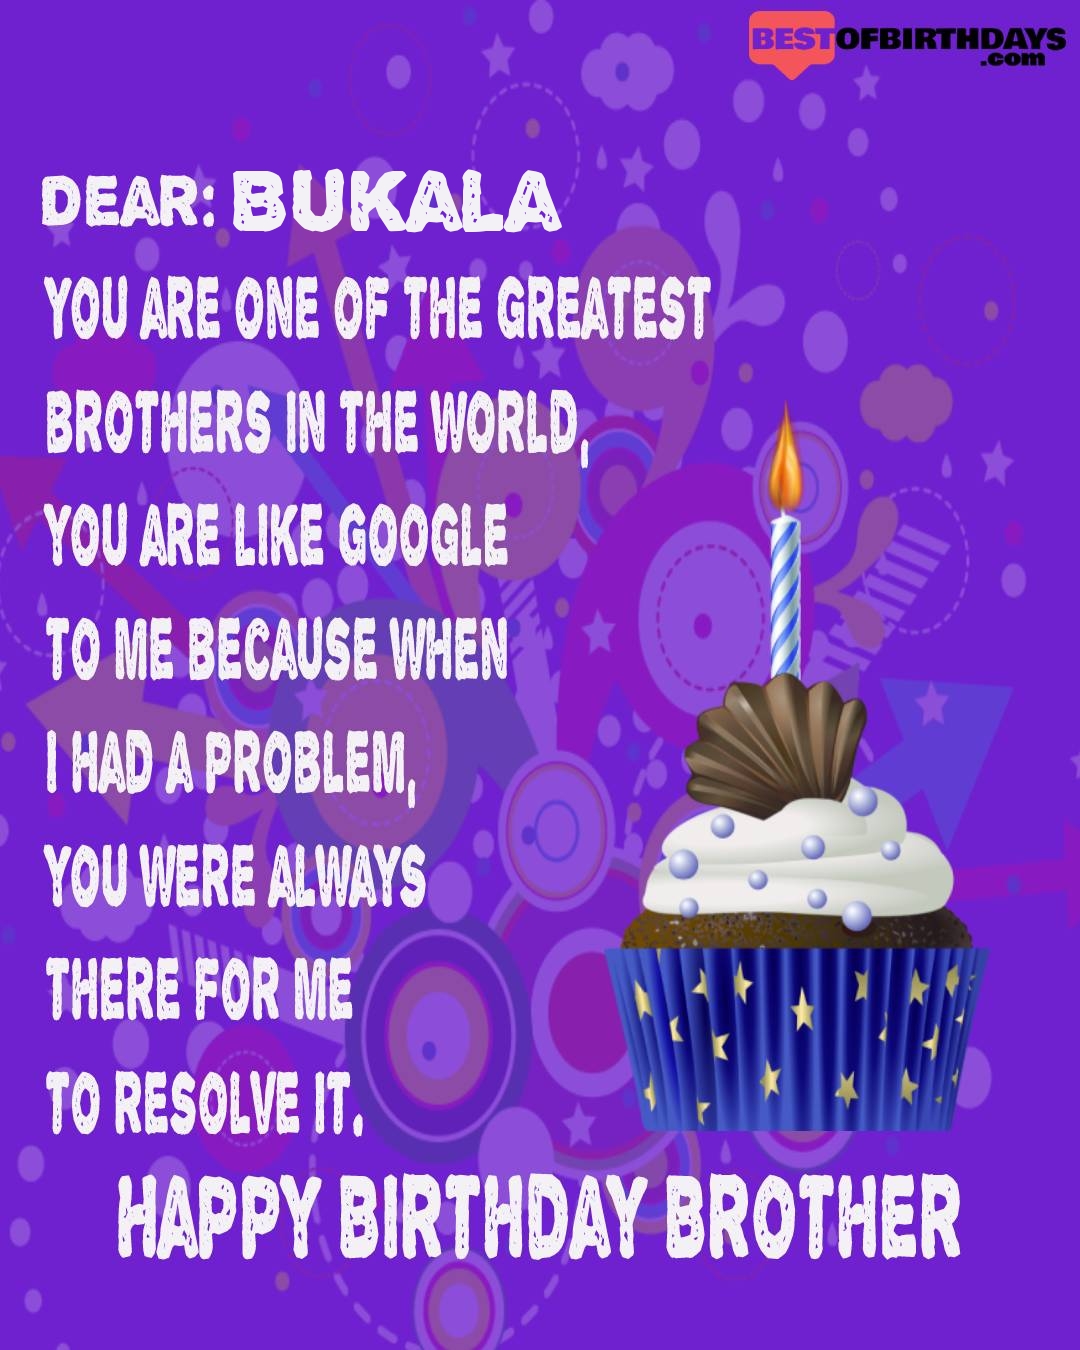 Happy birthday bukala bhai brother bro